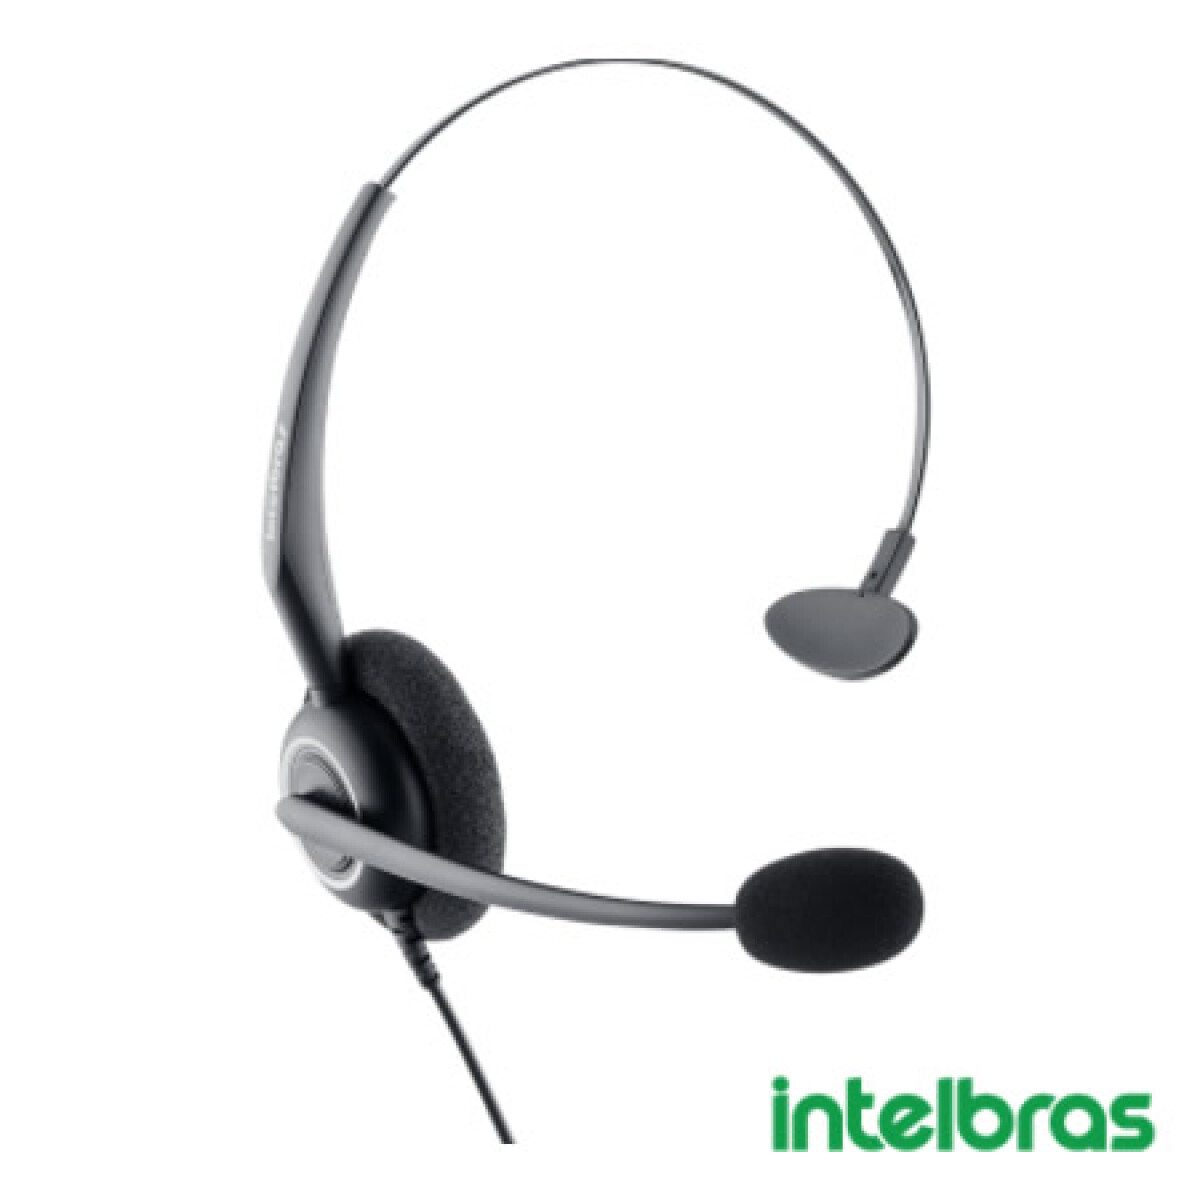 Telefonia | Call| Auricular (Headset)|CHS 55 (RJ9) Intelbras - Telefonia | Call| Auricular (headset)|chs 55 (rj9) Intelbras 